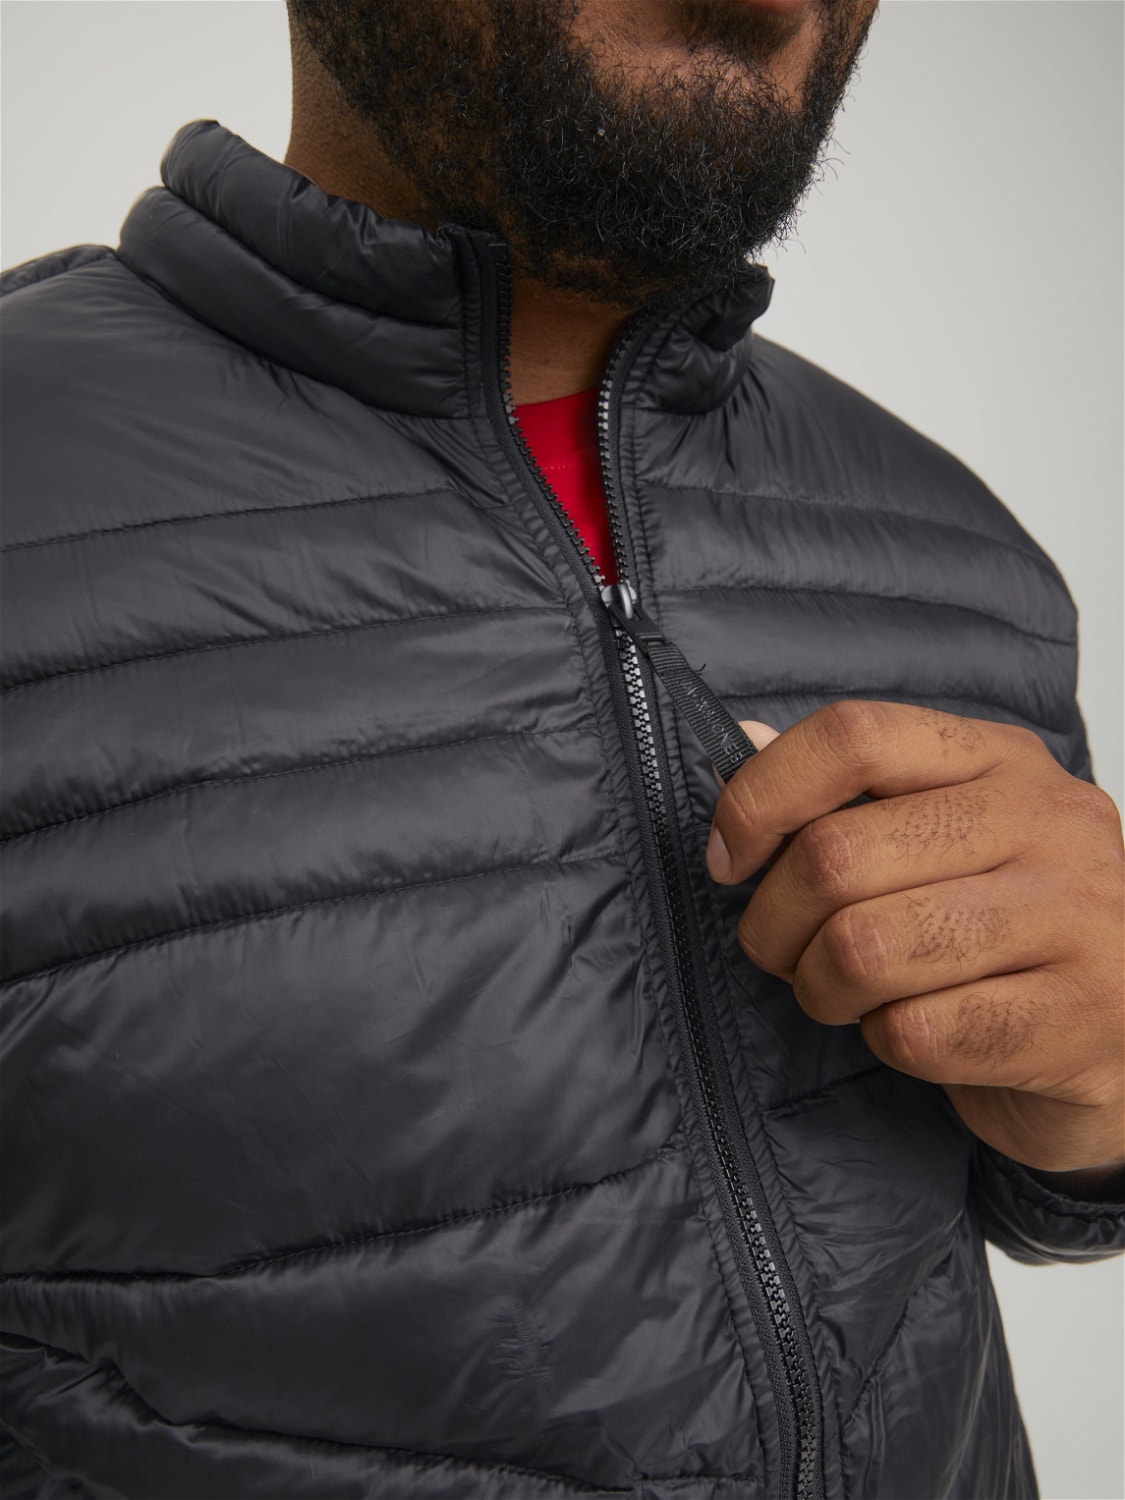 Jack & Jones Plus Size Puffer jacket -Black - 12214531